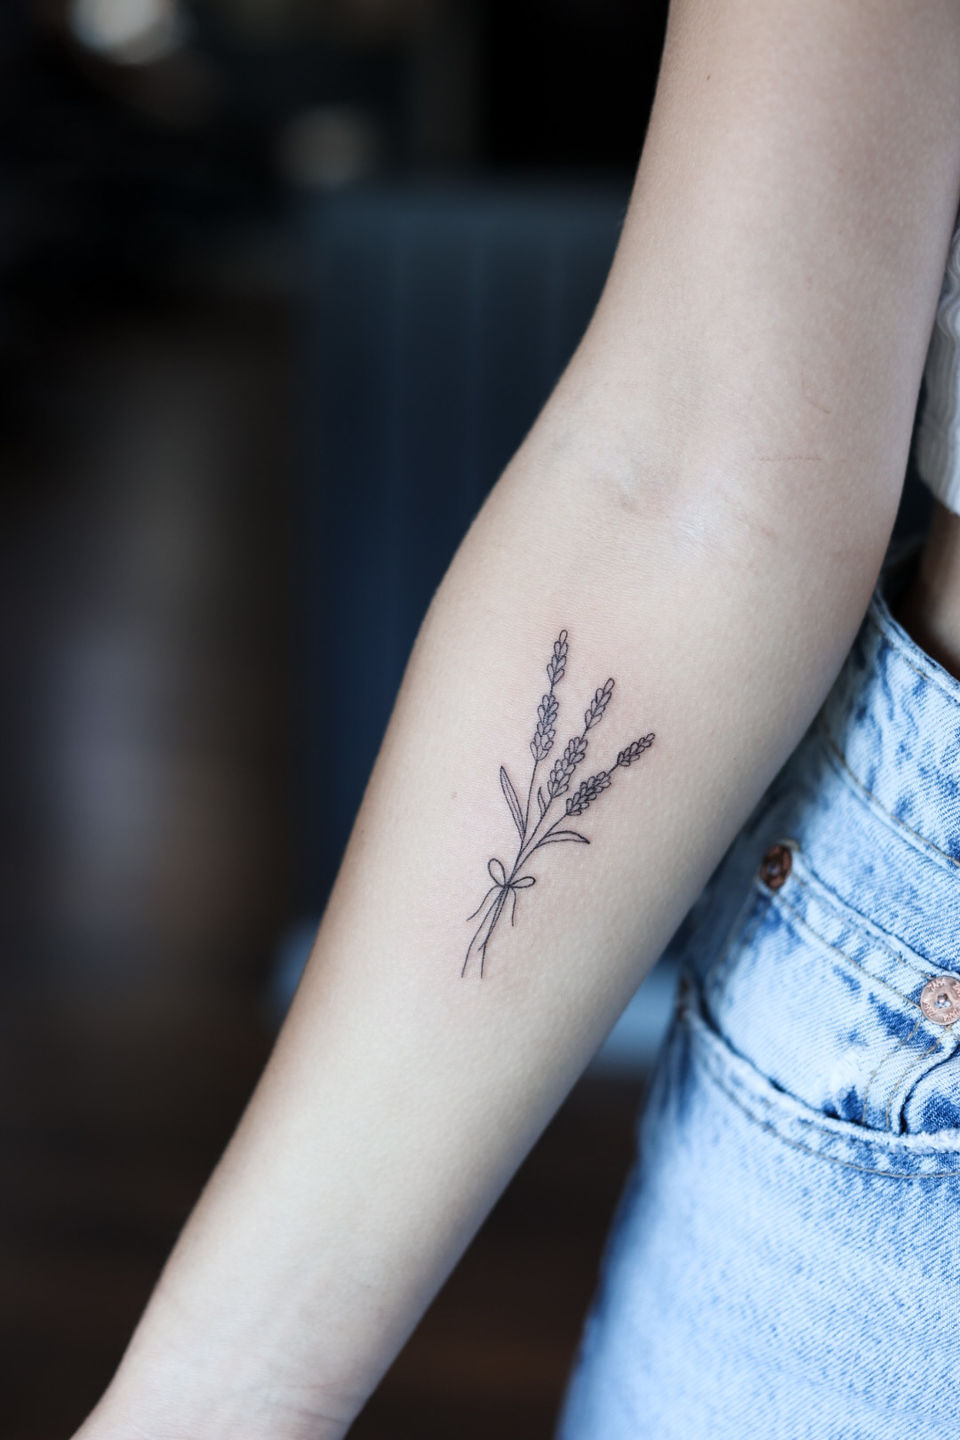 Latest Lavender Tattoos | Find Lavender Tattoos